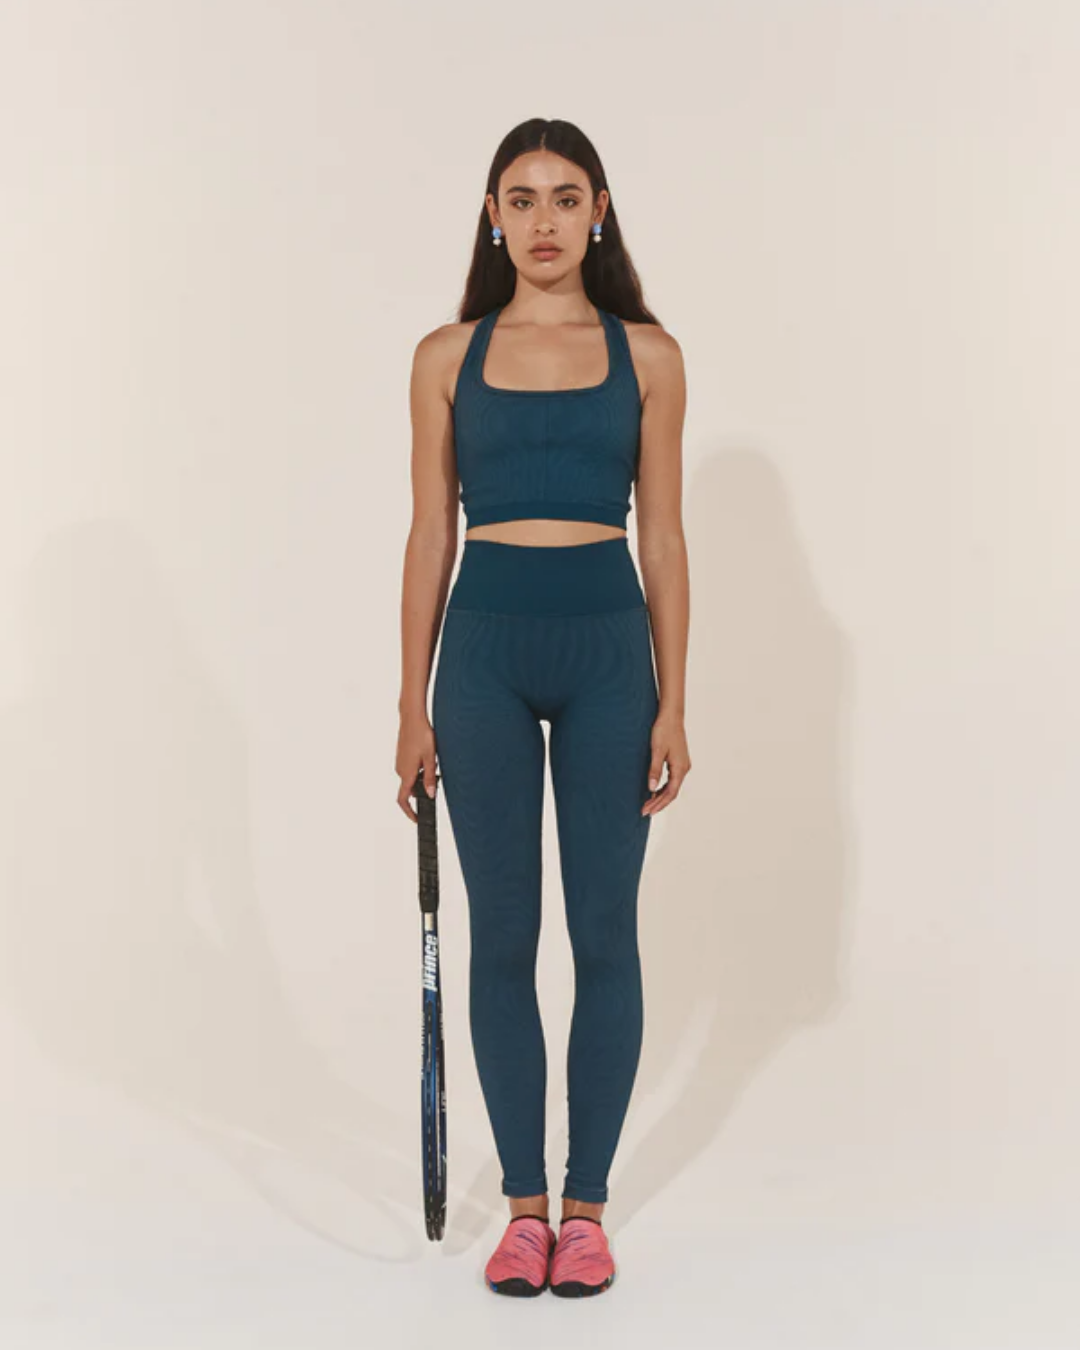 Move Legging 02 - Deep Blue Activewear by Pinky &amp; Kamal - Prae Wellness